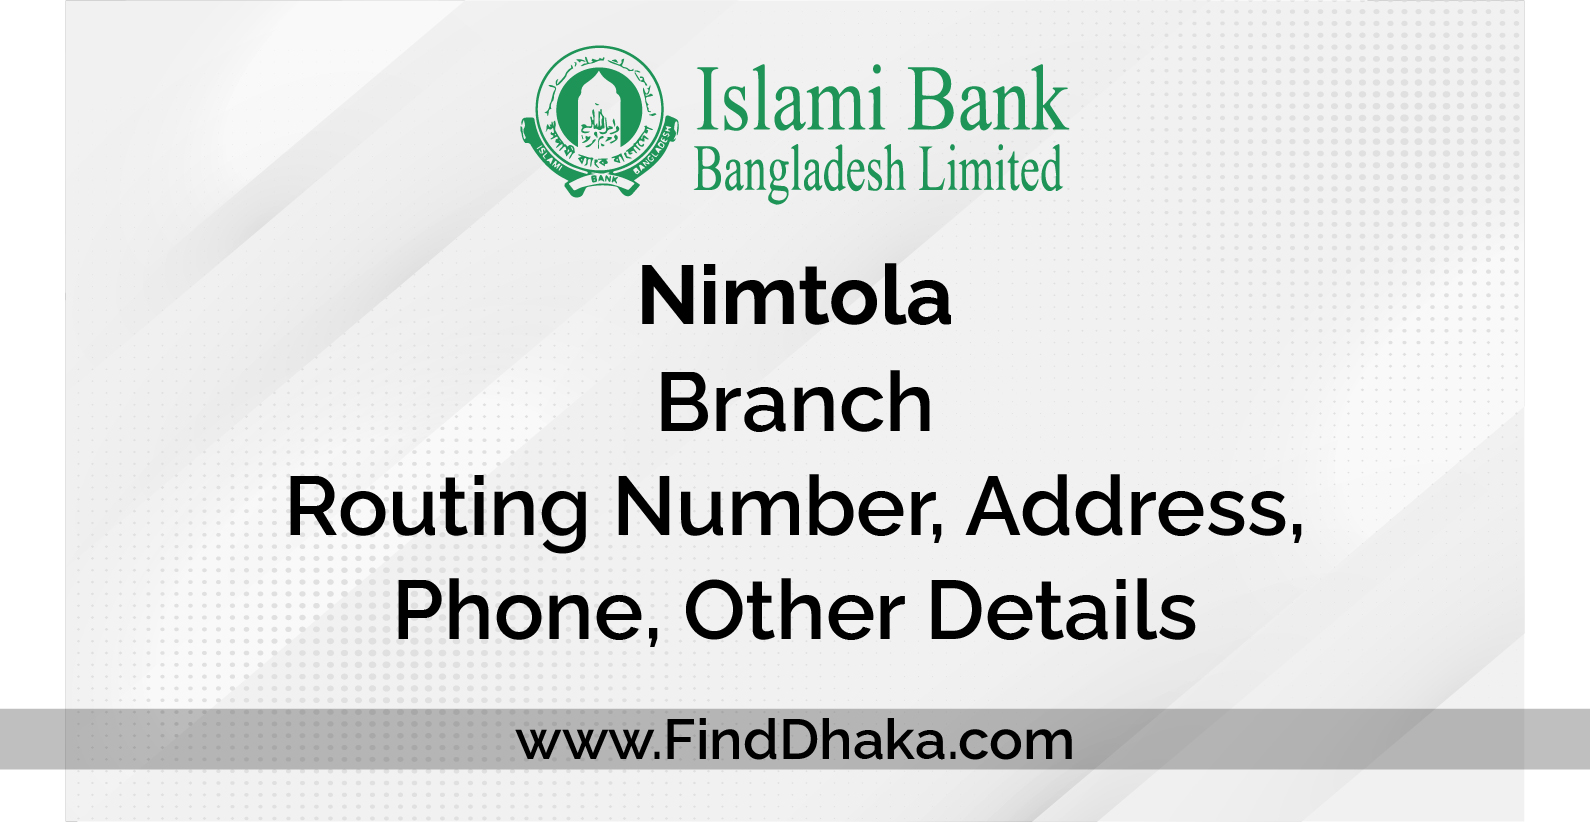 Islami Bank info017000